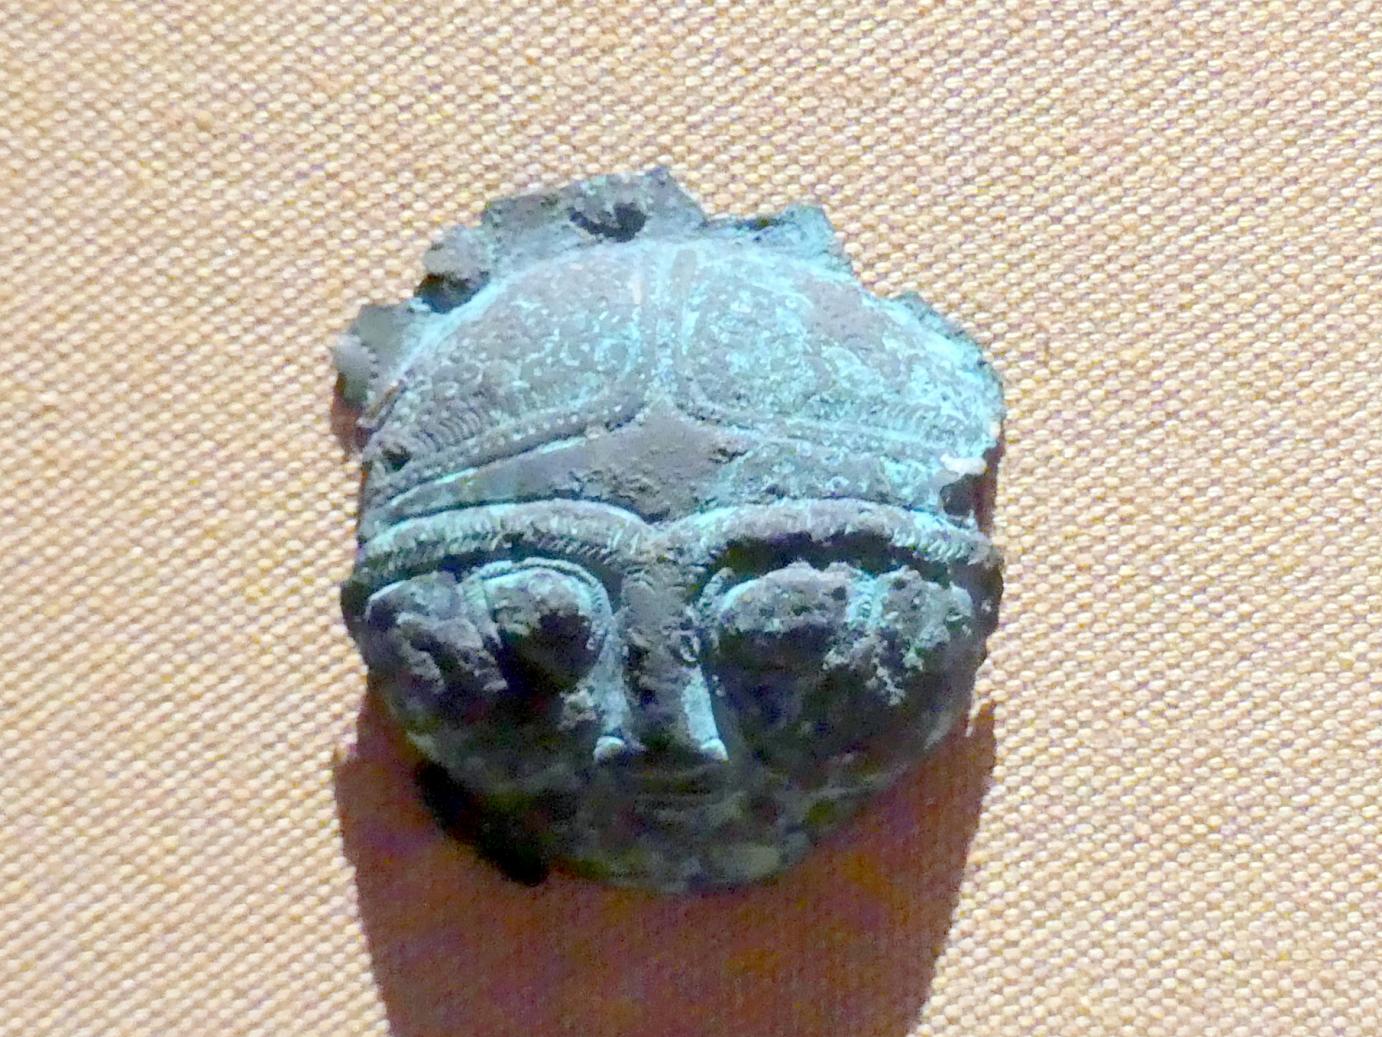 Scheibenkopfnadel (Kopf), Eisenzeit III, 800 - 600 v. Chr., 800 - 600 v. Chr., Bild 1/2